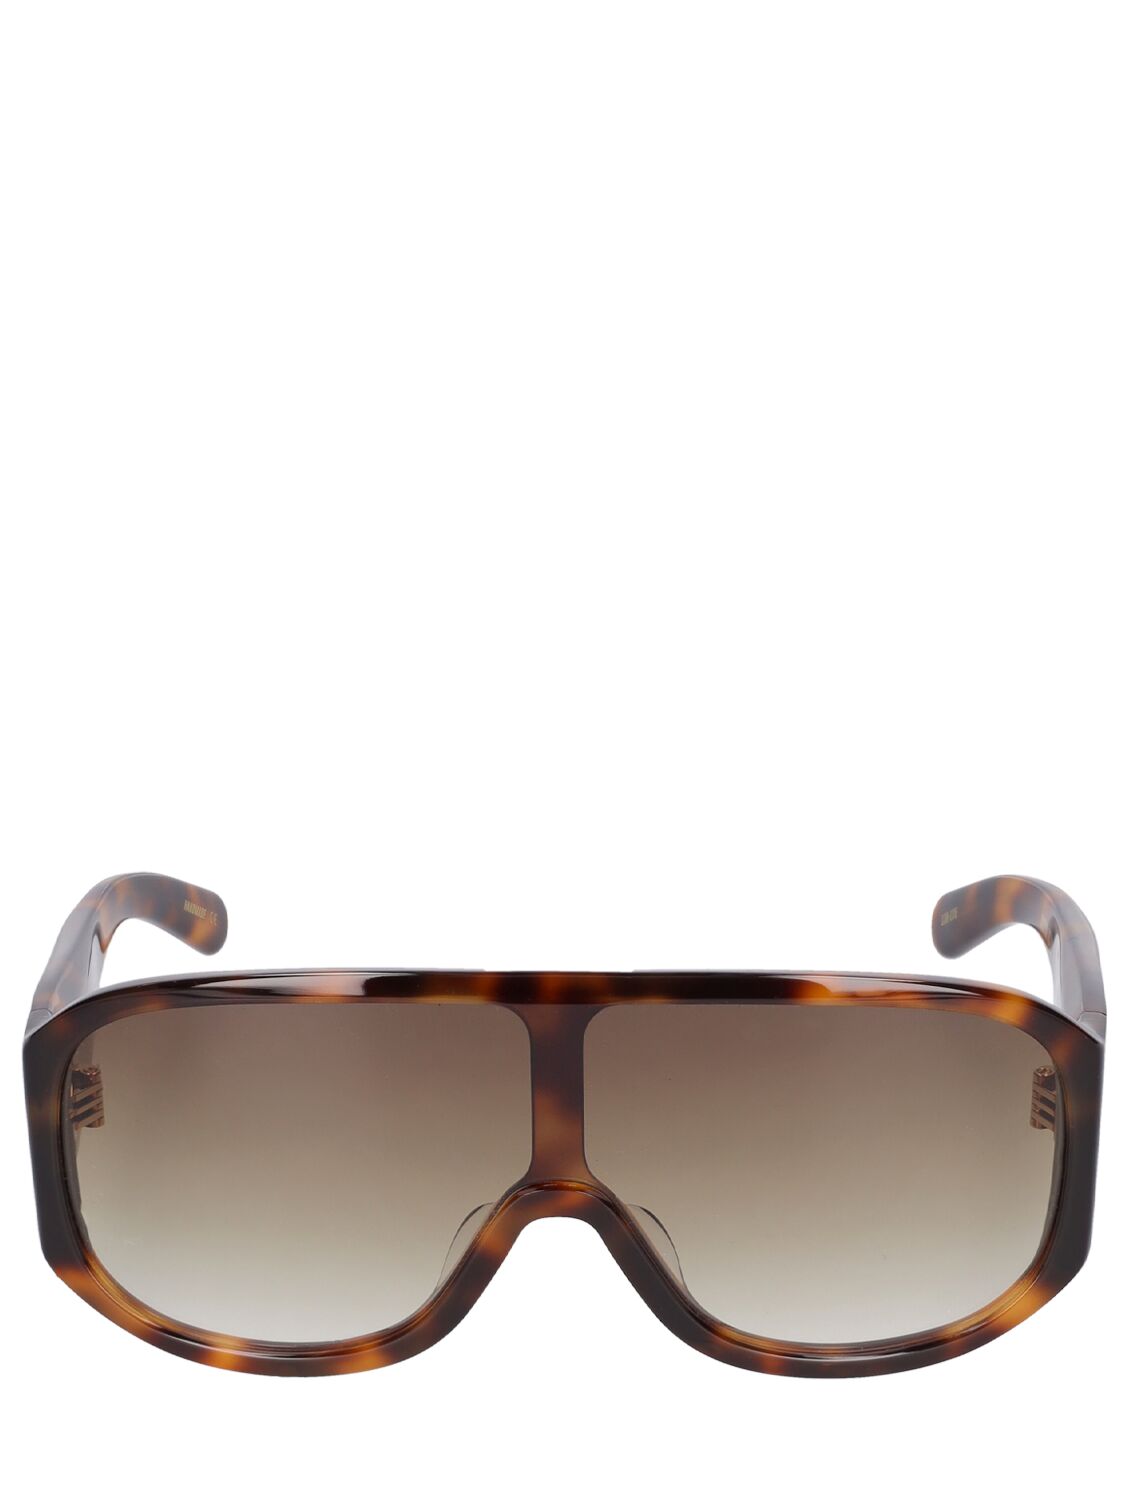 Flatlist Eyewear John Jovino Sunglasses In Brown